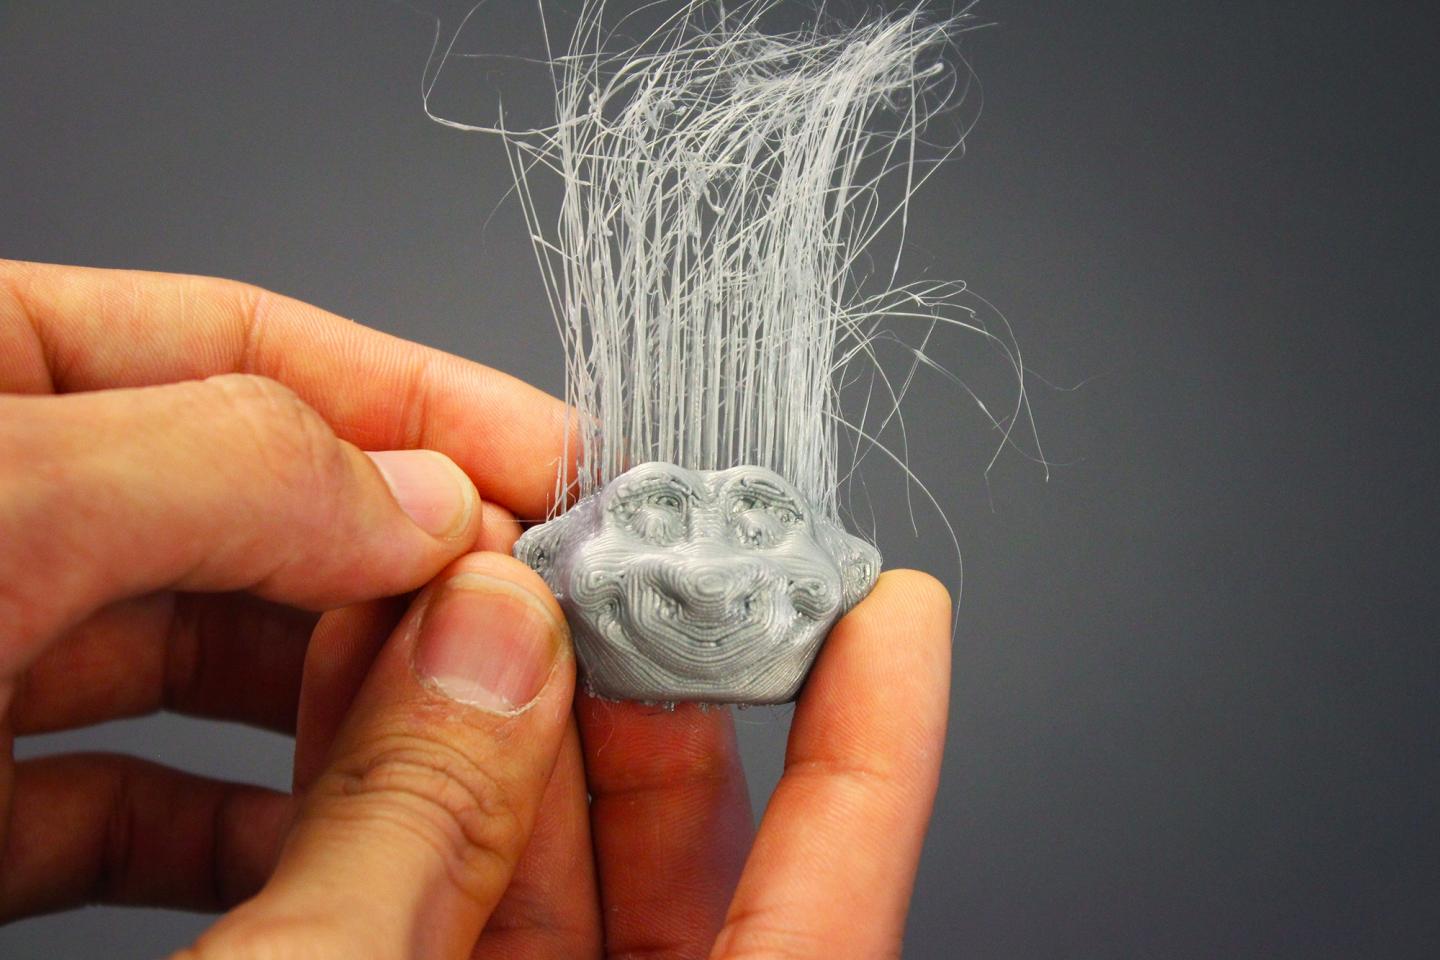 Hair-like fibers on a troll head. (Image Credit: Carnegie Mellon University)